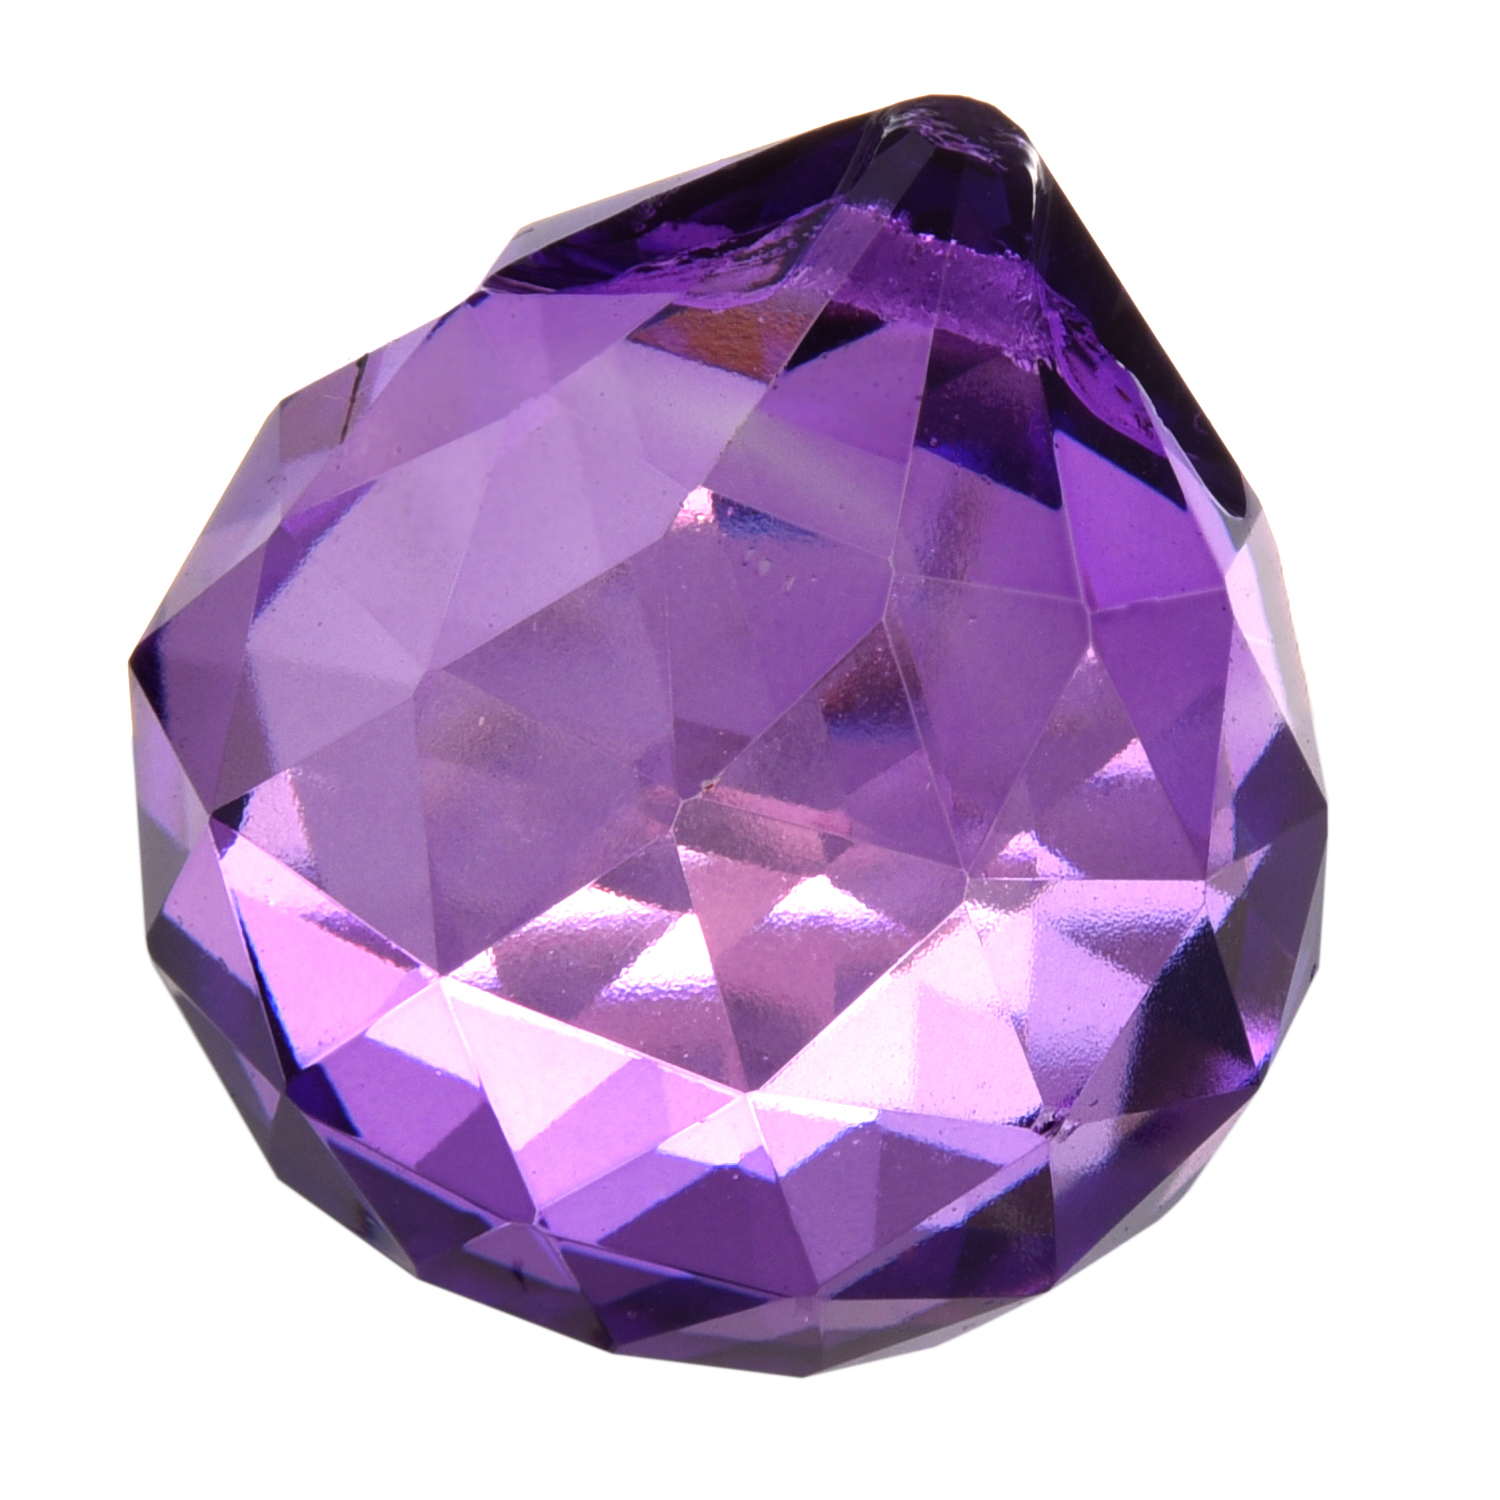 30mm Purple Crystal Ball Prisms AD 190268152761 | eBay